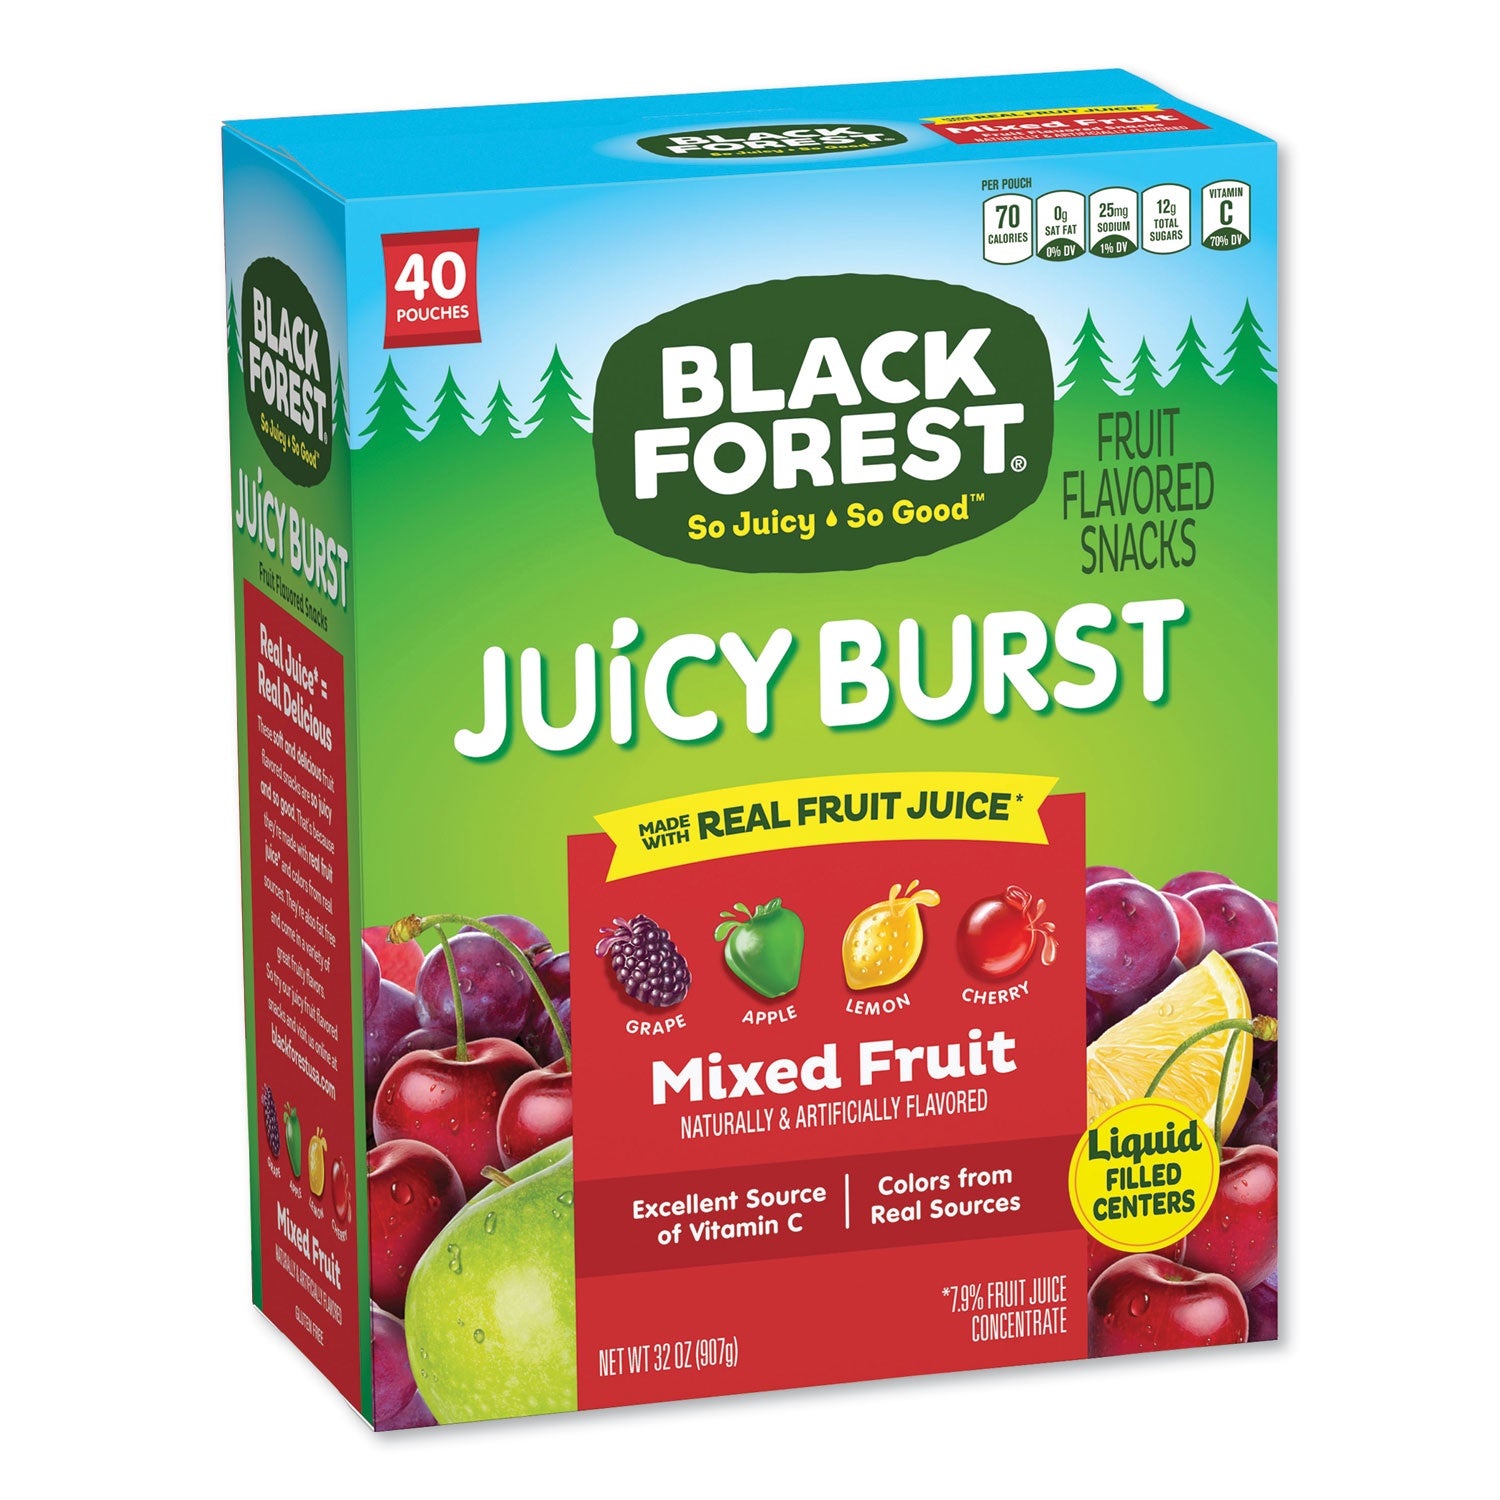 Black Forest Juicy Burst Mixed Fruit Snacks 40pk